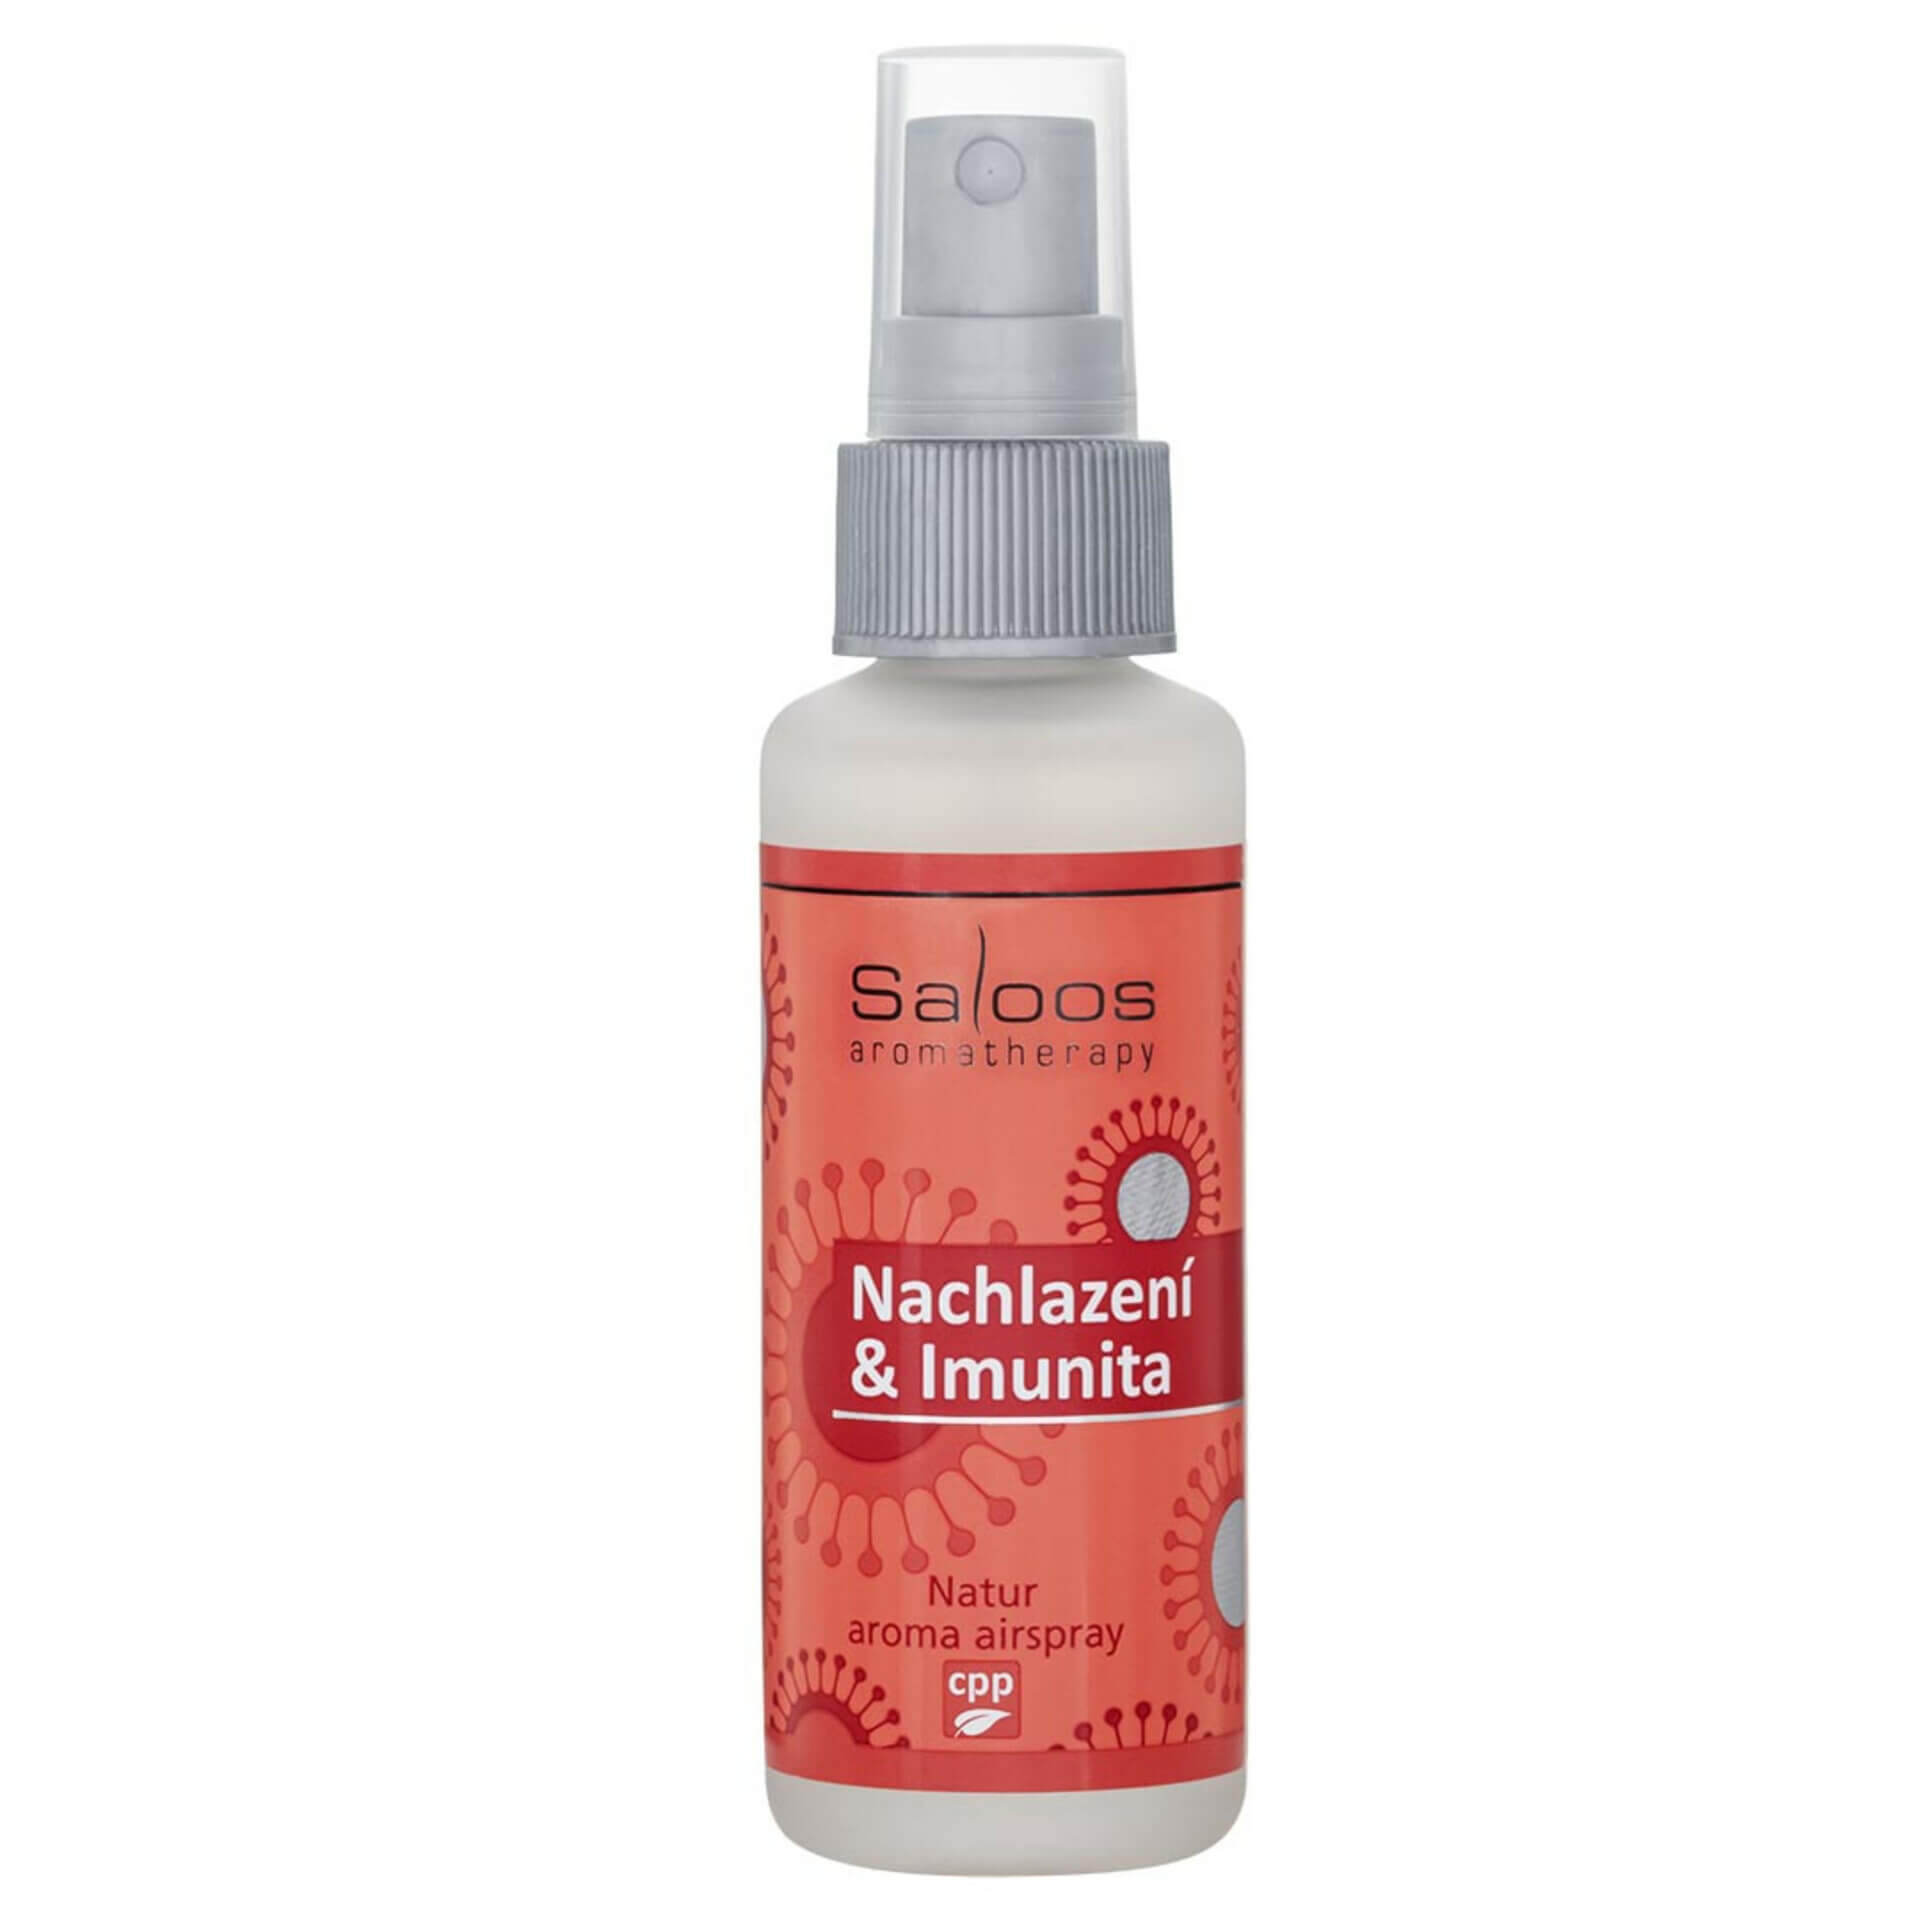 E-shop Saloos Natur aroma airspray Prechladnutie & Imunita 50 ml